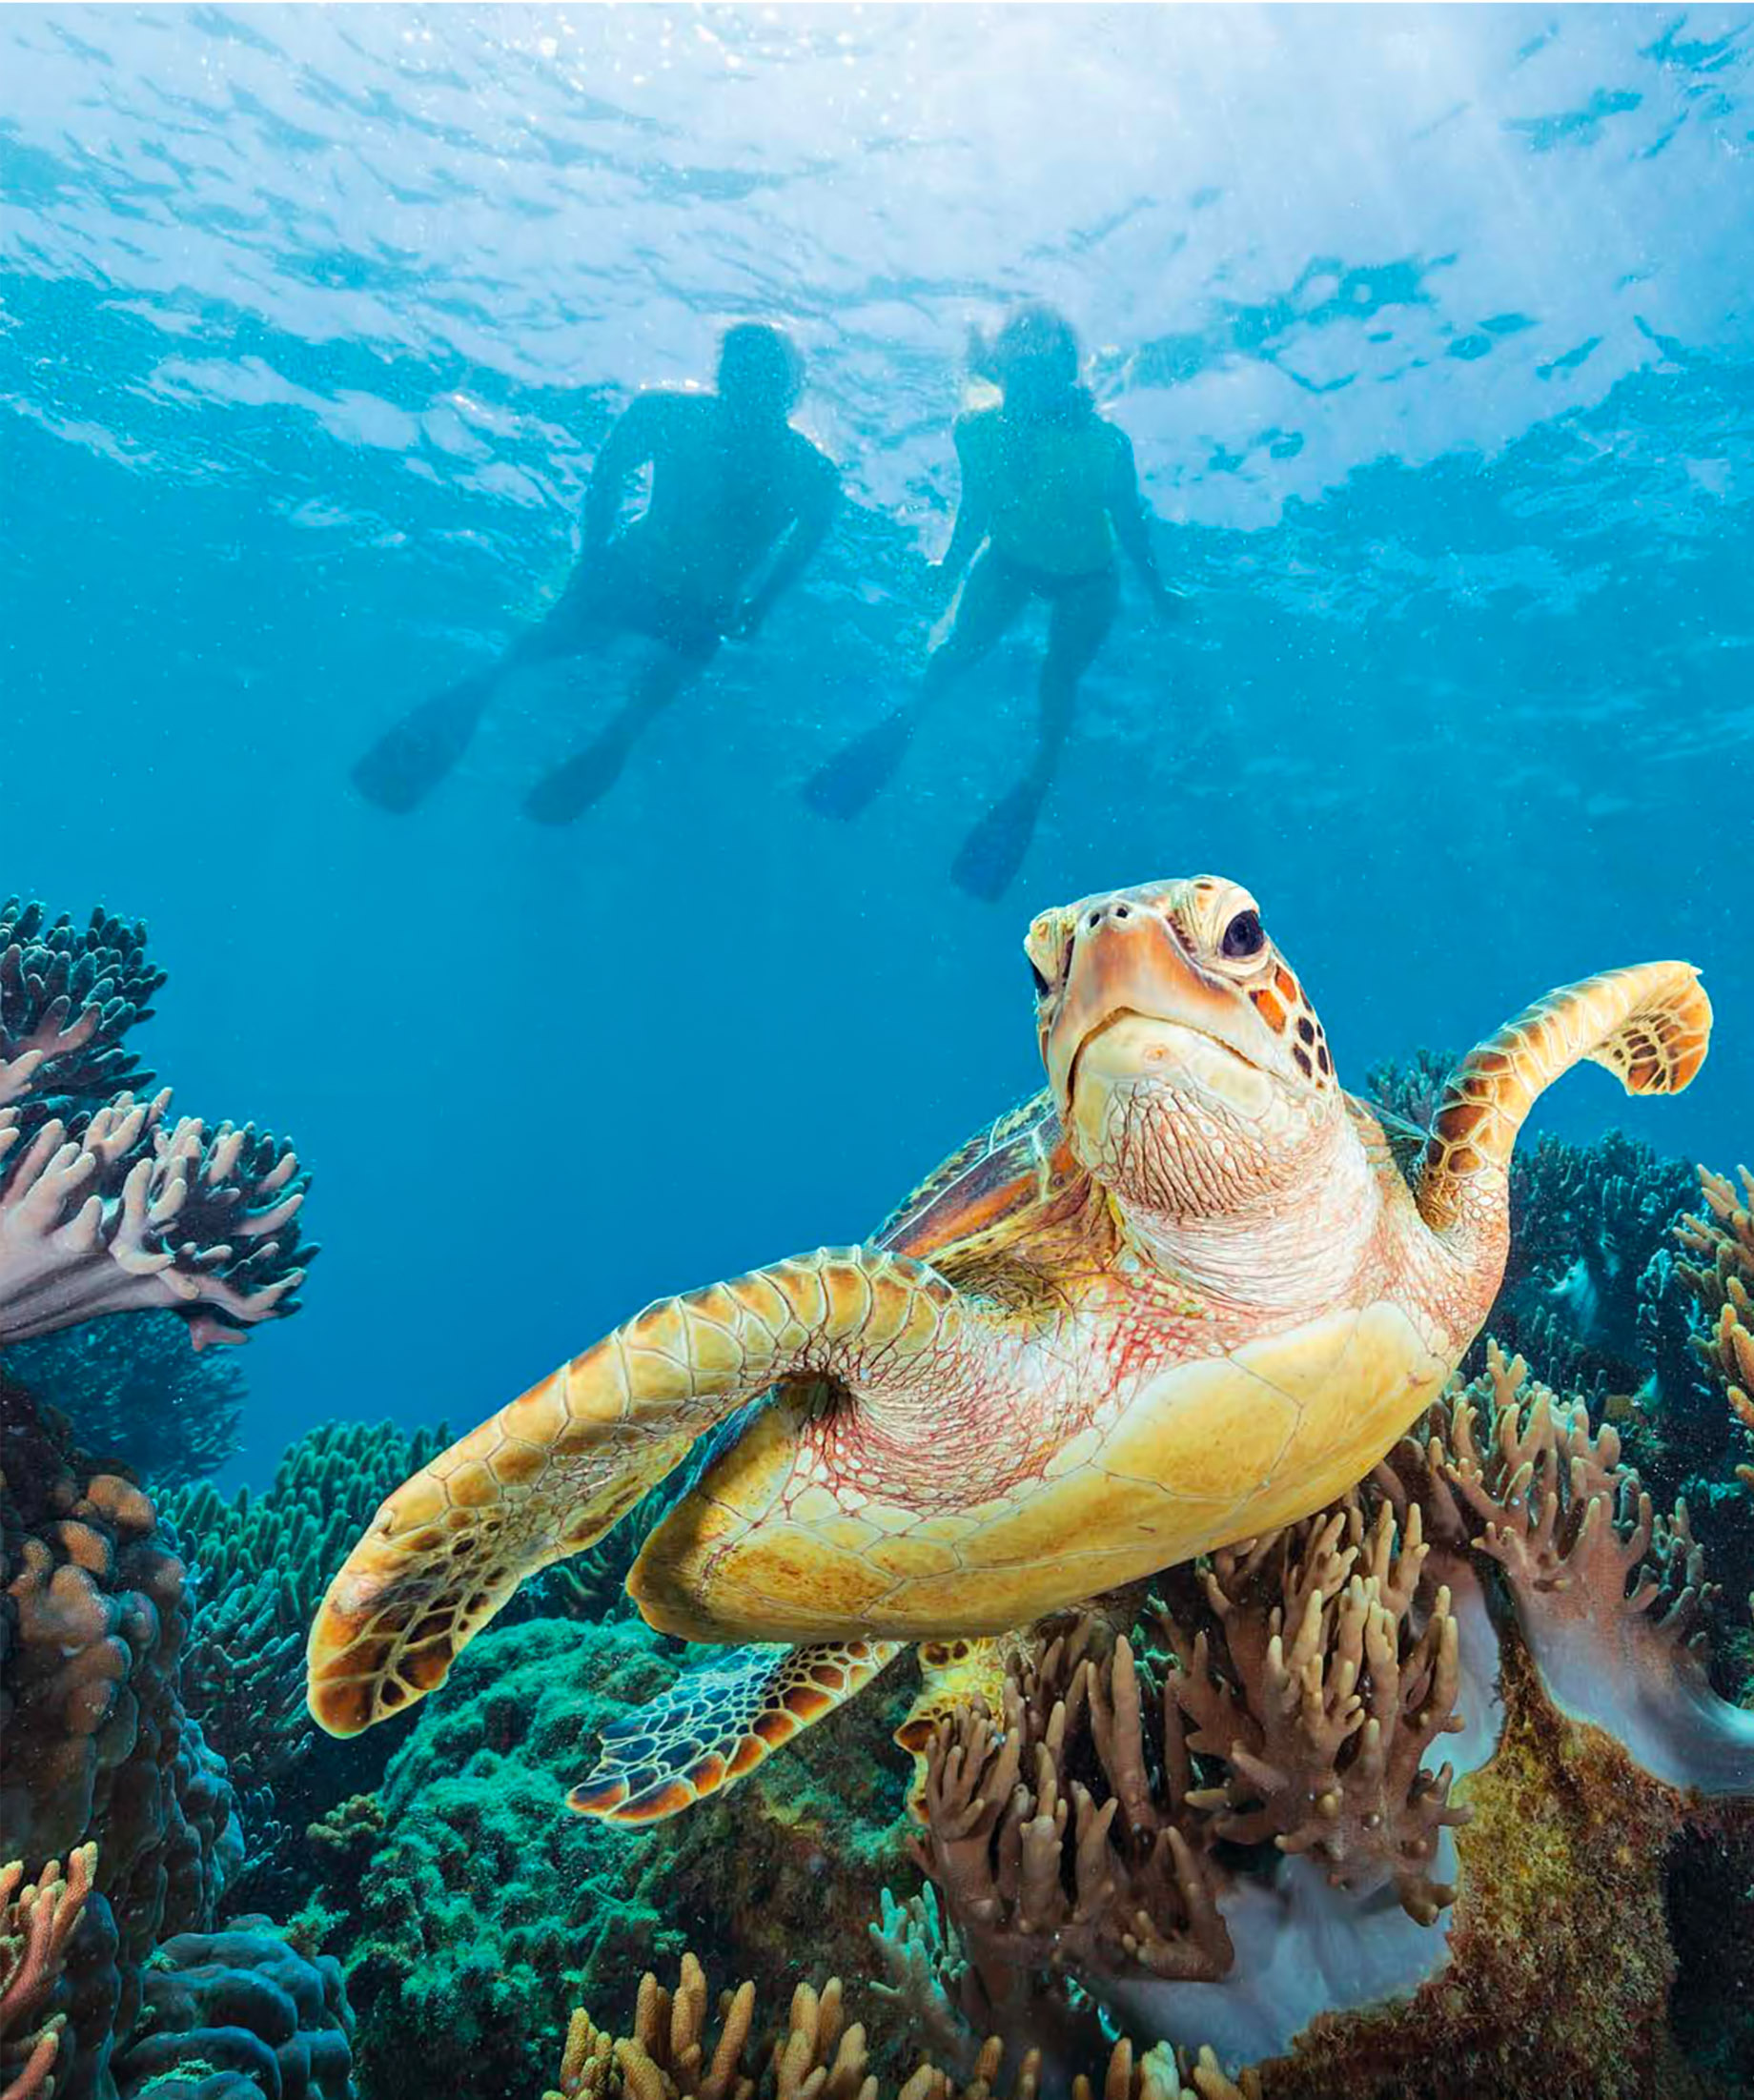 InterContinental Hayman Island Resort – Whitsunday Islands, Australia – Sea Turtle